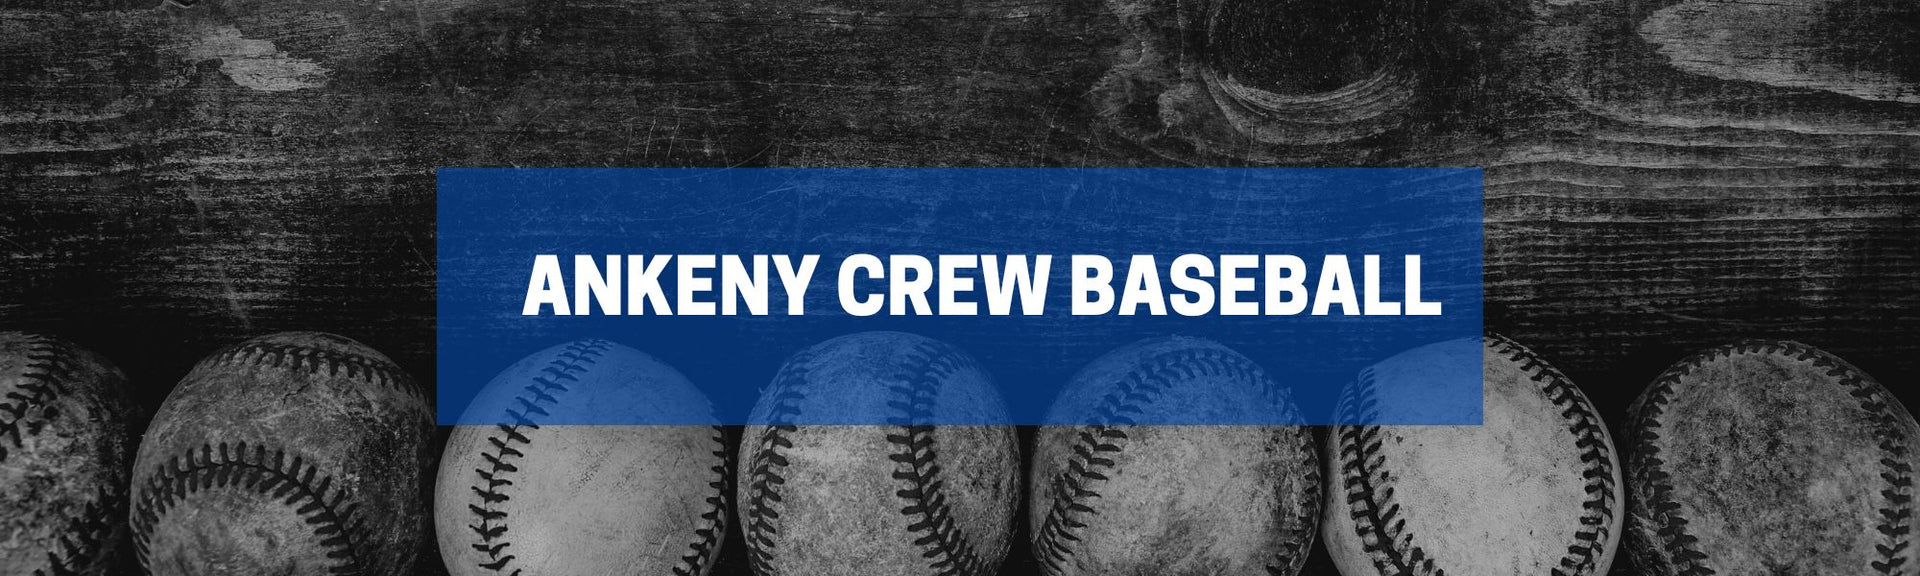 Ankeny Crew Baseball